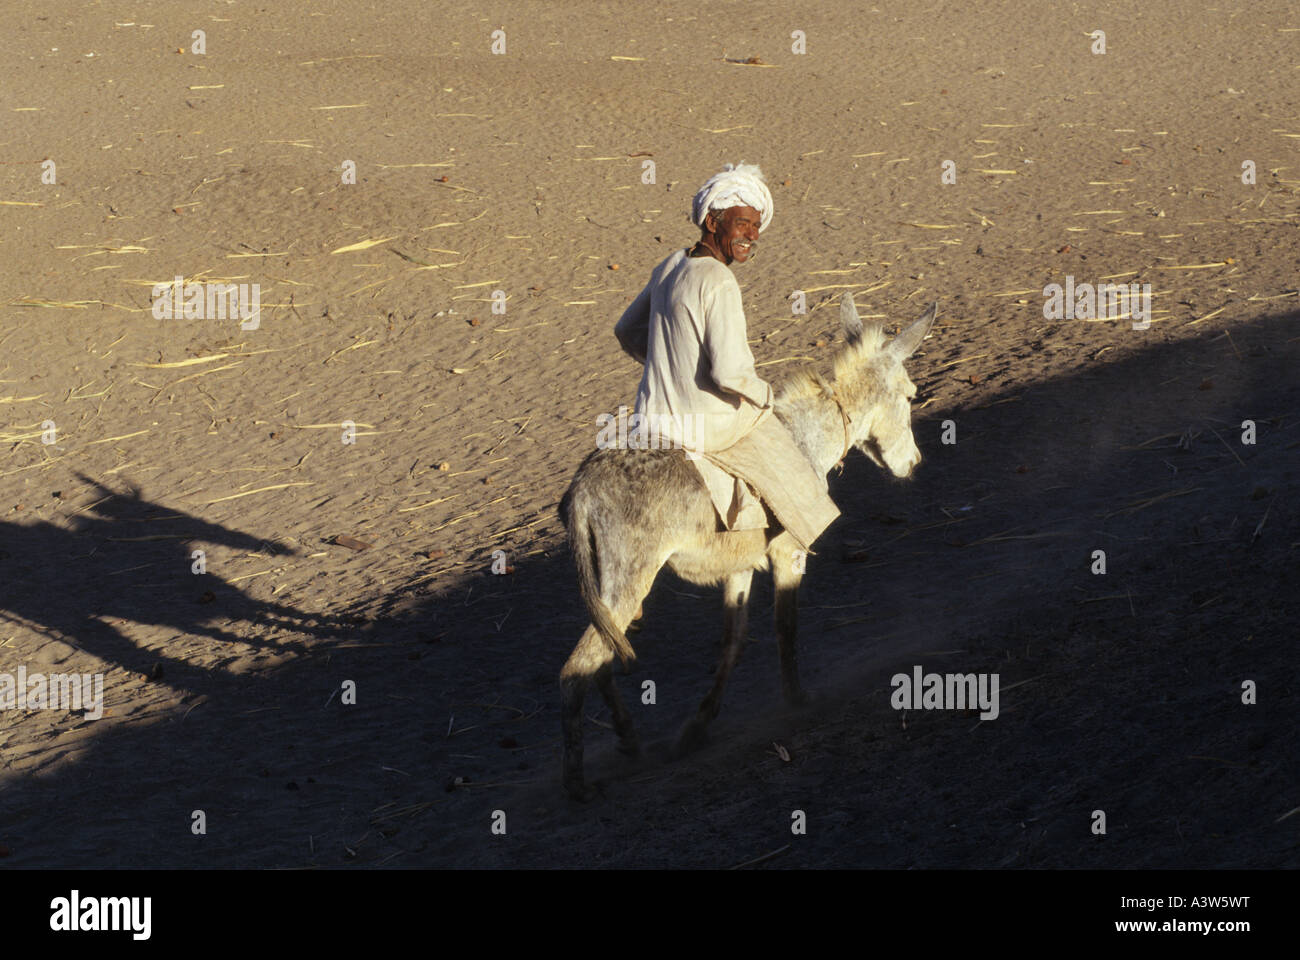 man on donkey nuri north sudan Stock Photo